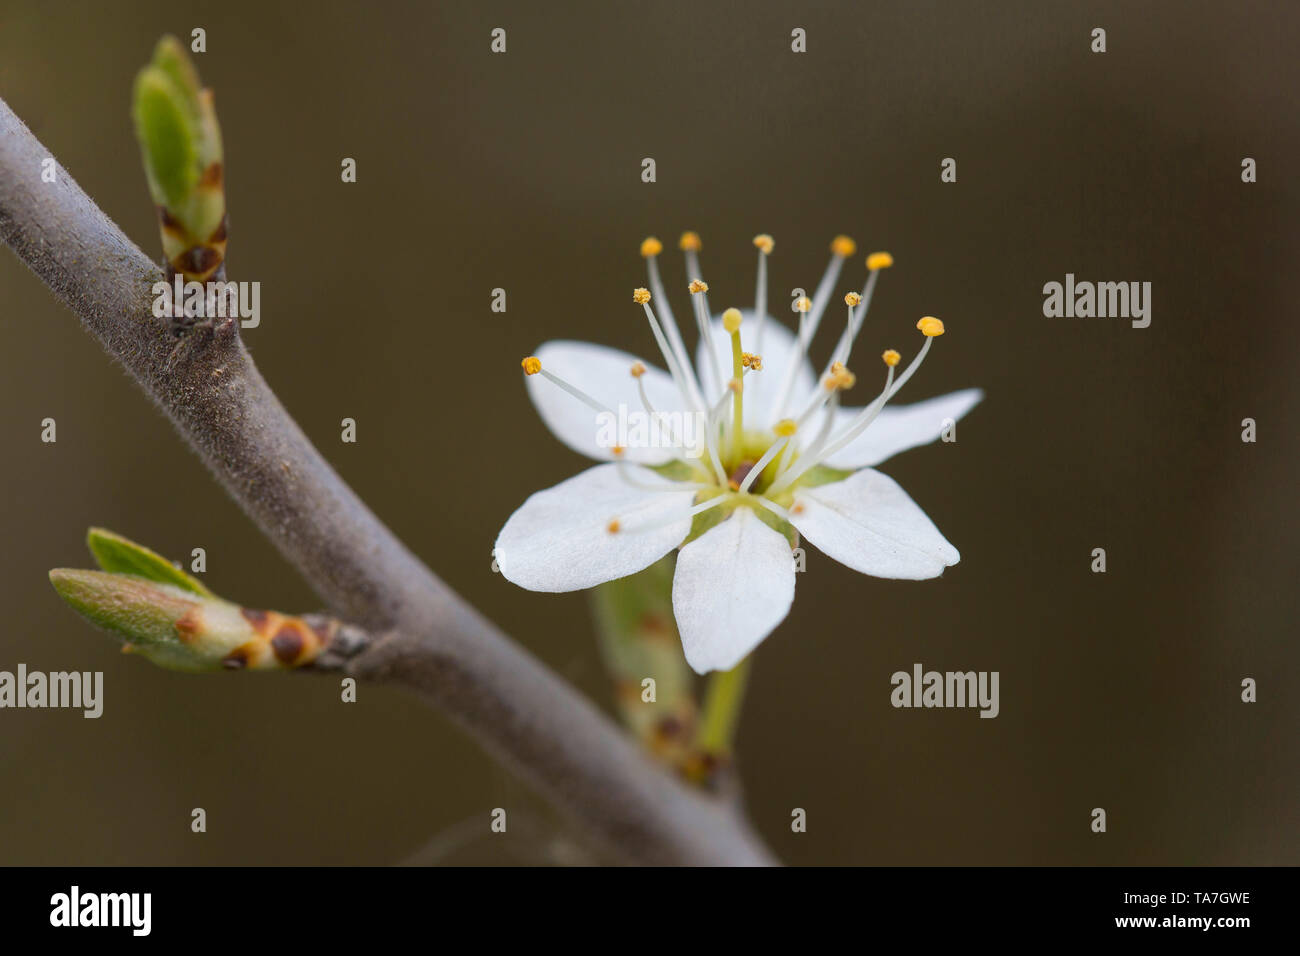 Prunellier, prunelle (Prunus spinosa), rameau en fleurs. Allemagne Banque D'Images